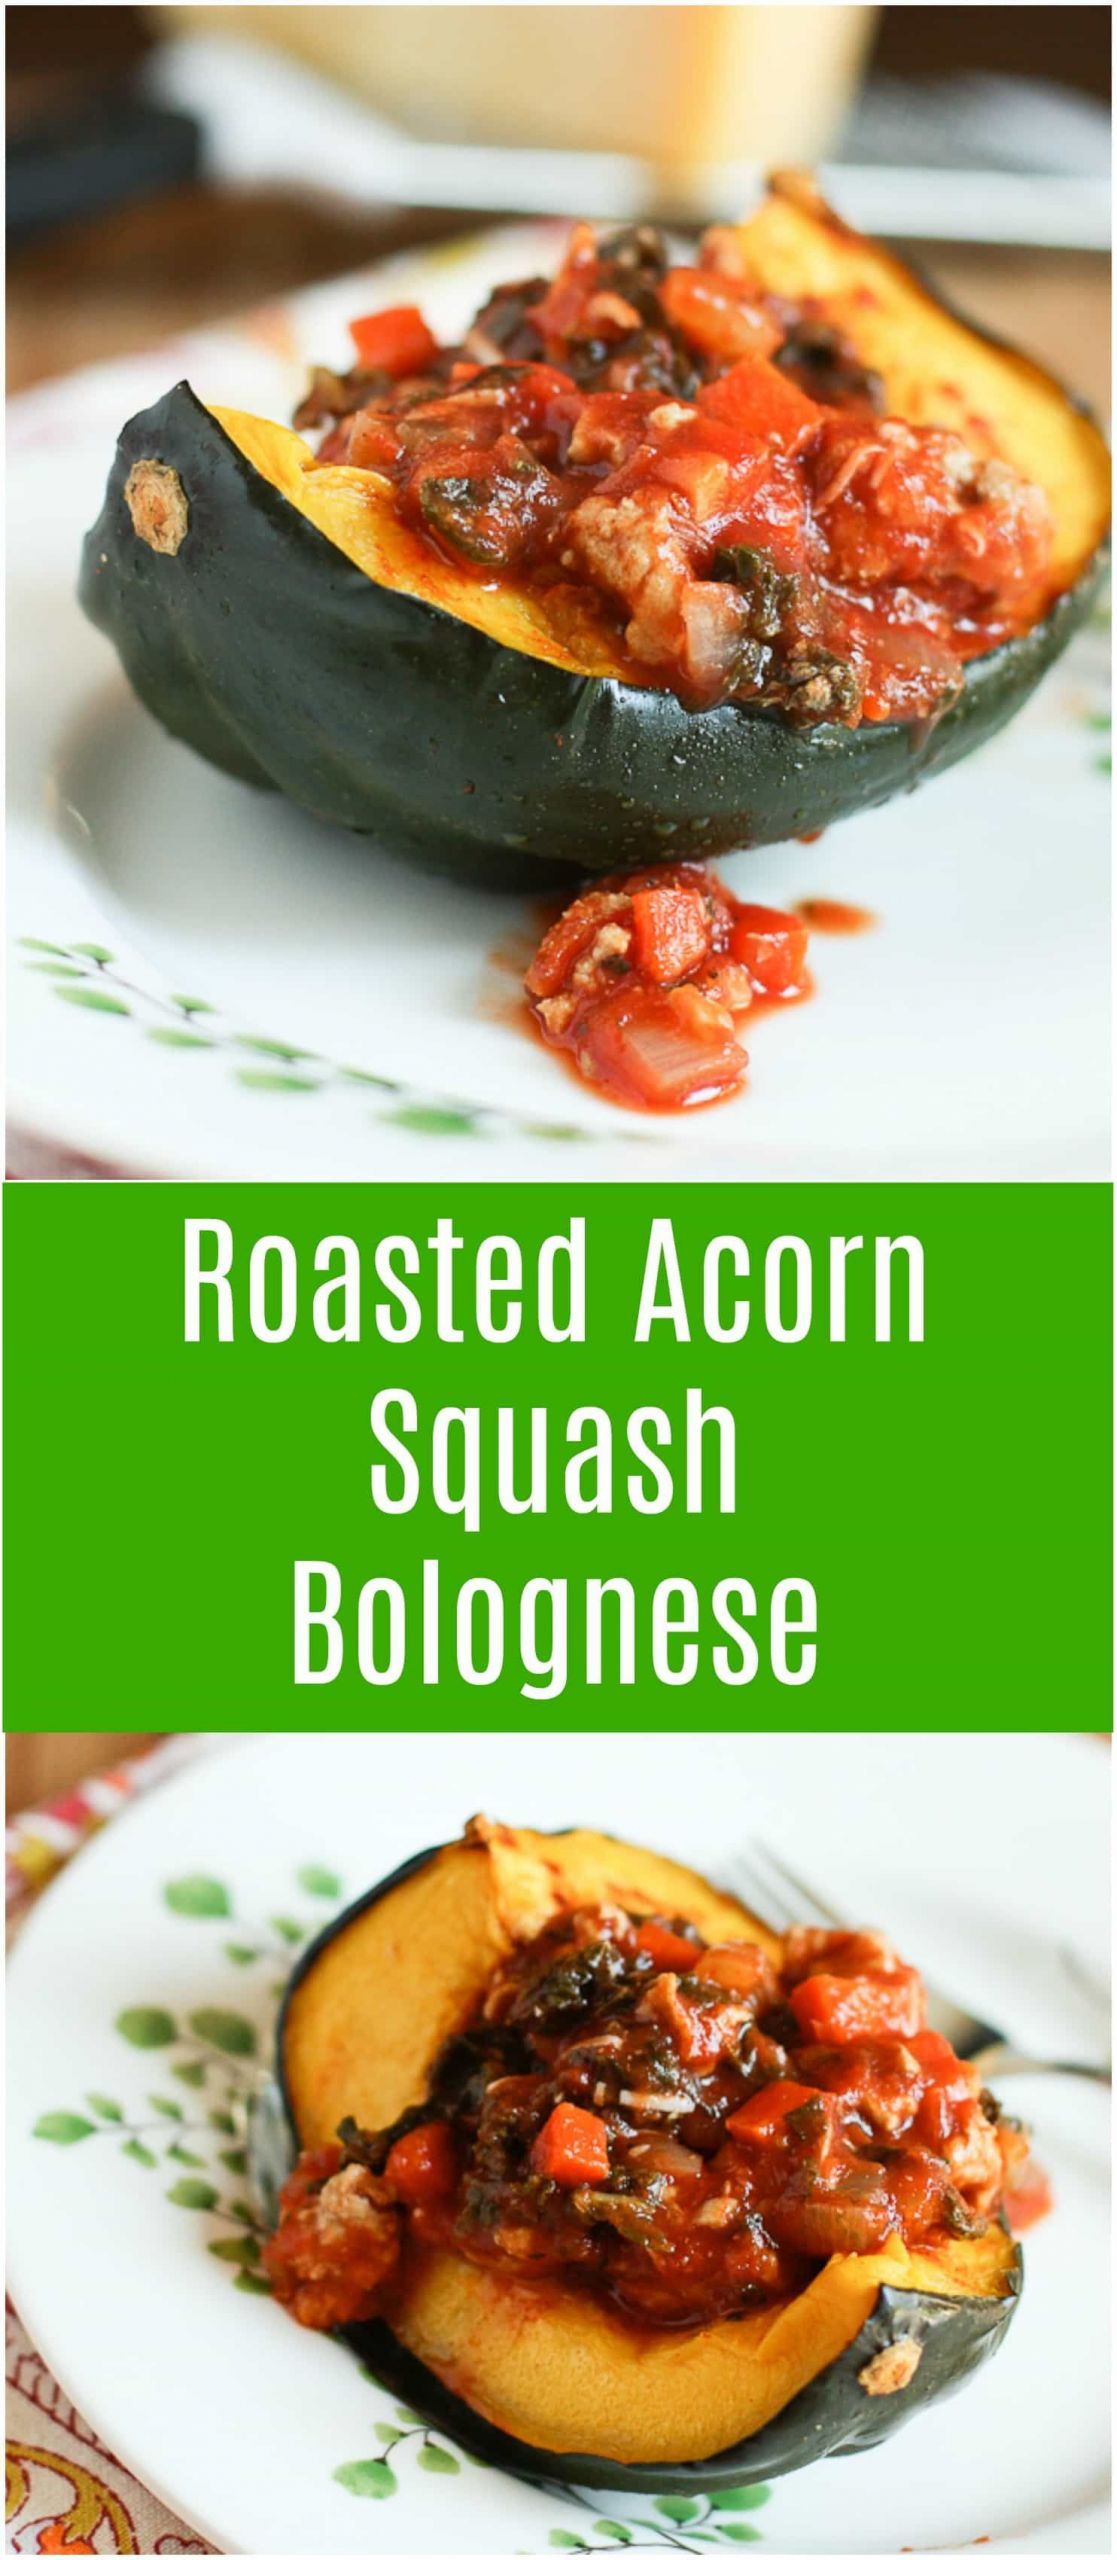 Low Carb Acorn Squash Recipes
 Roasted Acorn Squash Bolognese Recipe